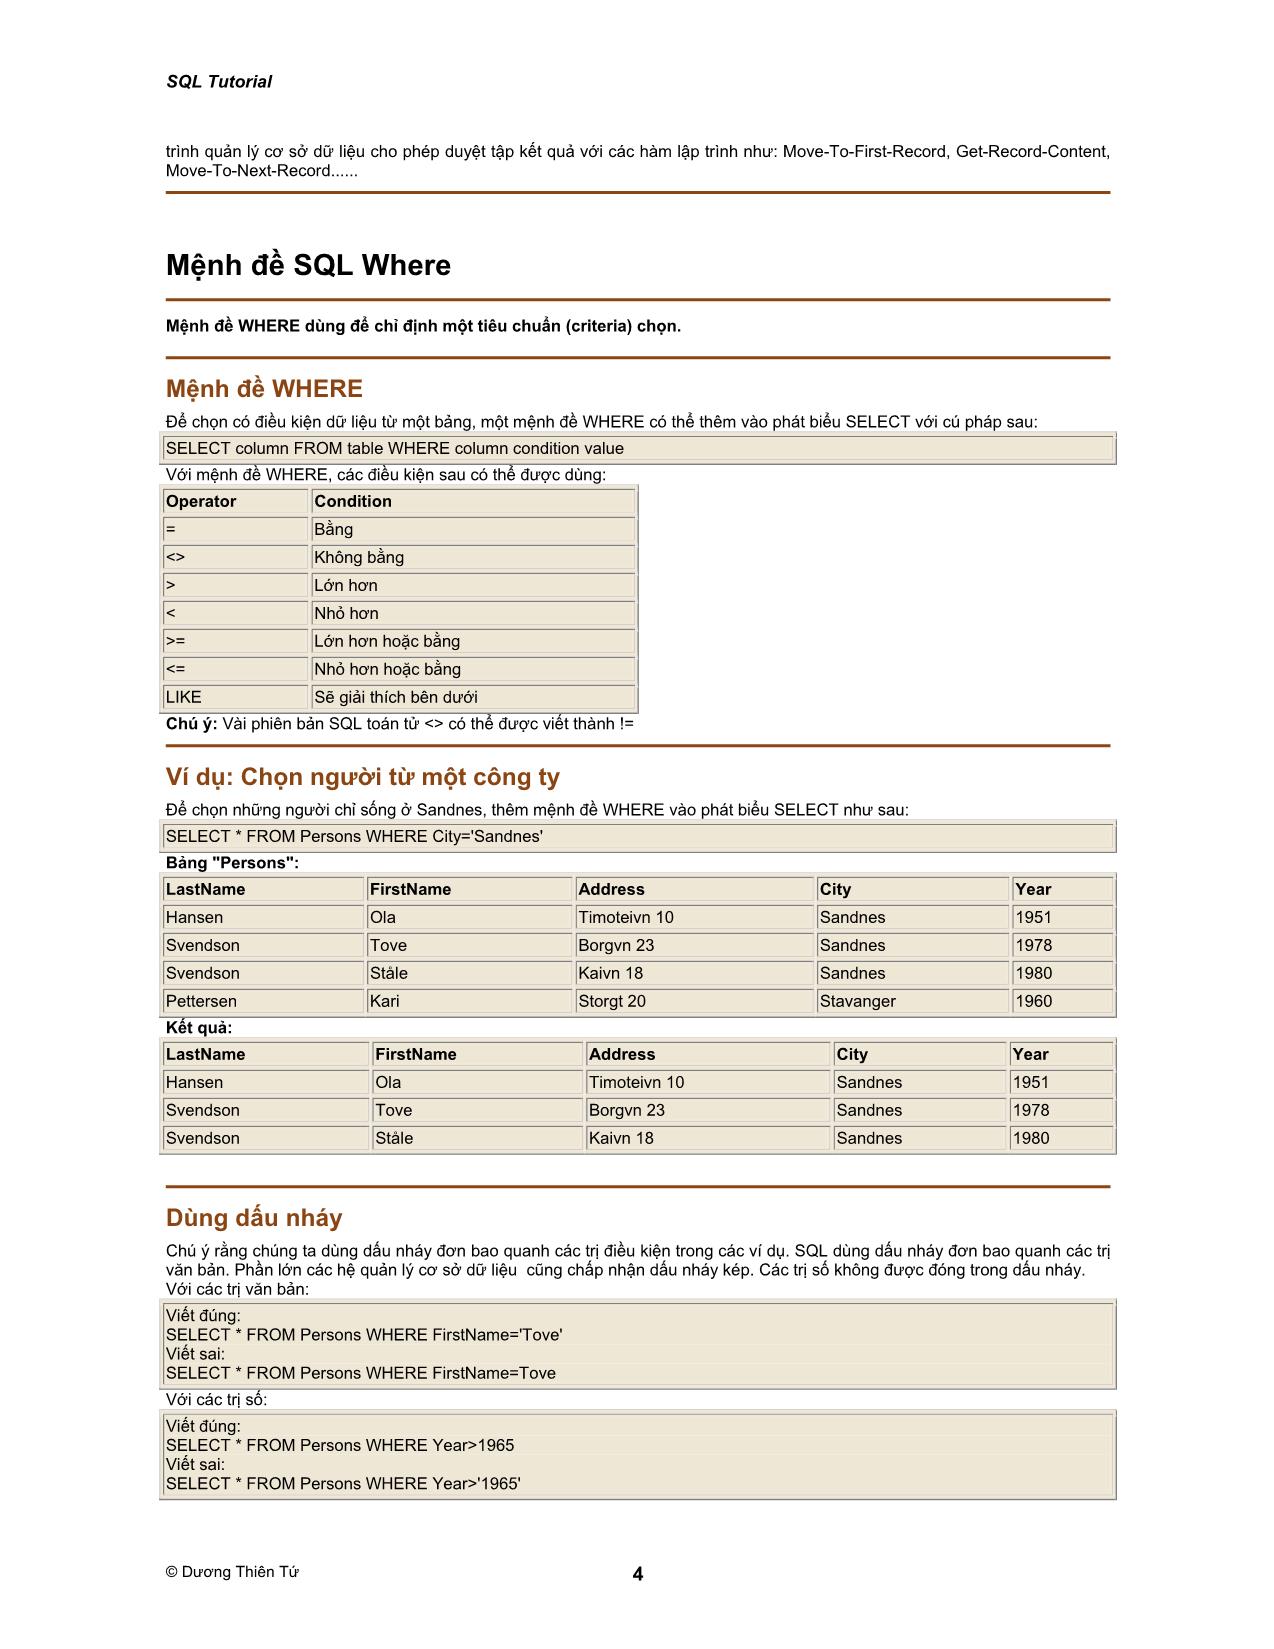 SQL Tutorial trang 4